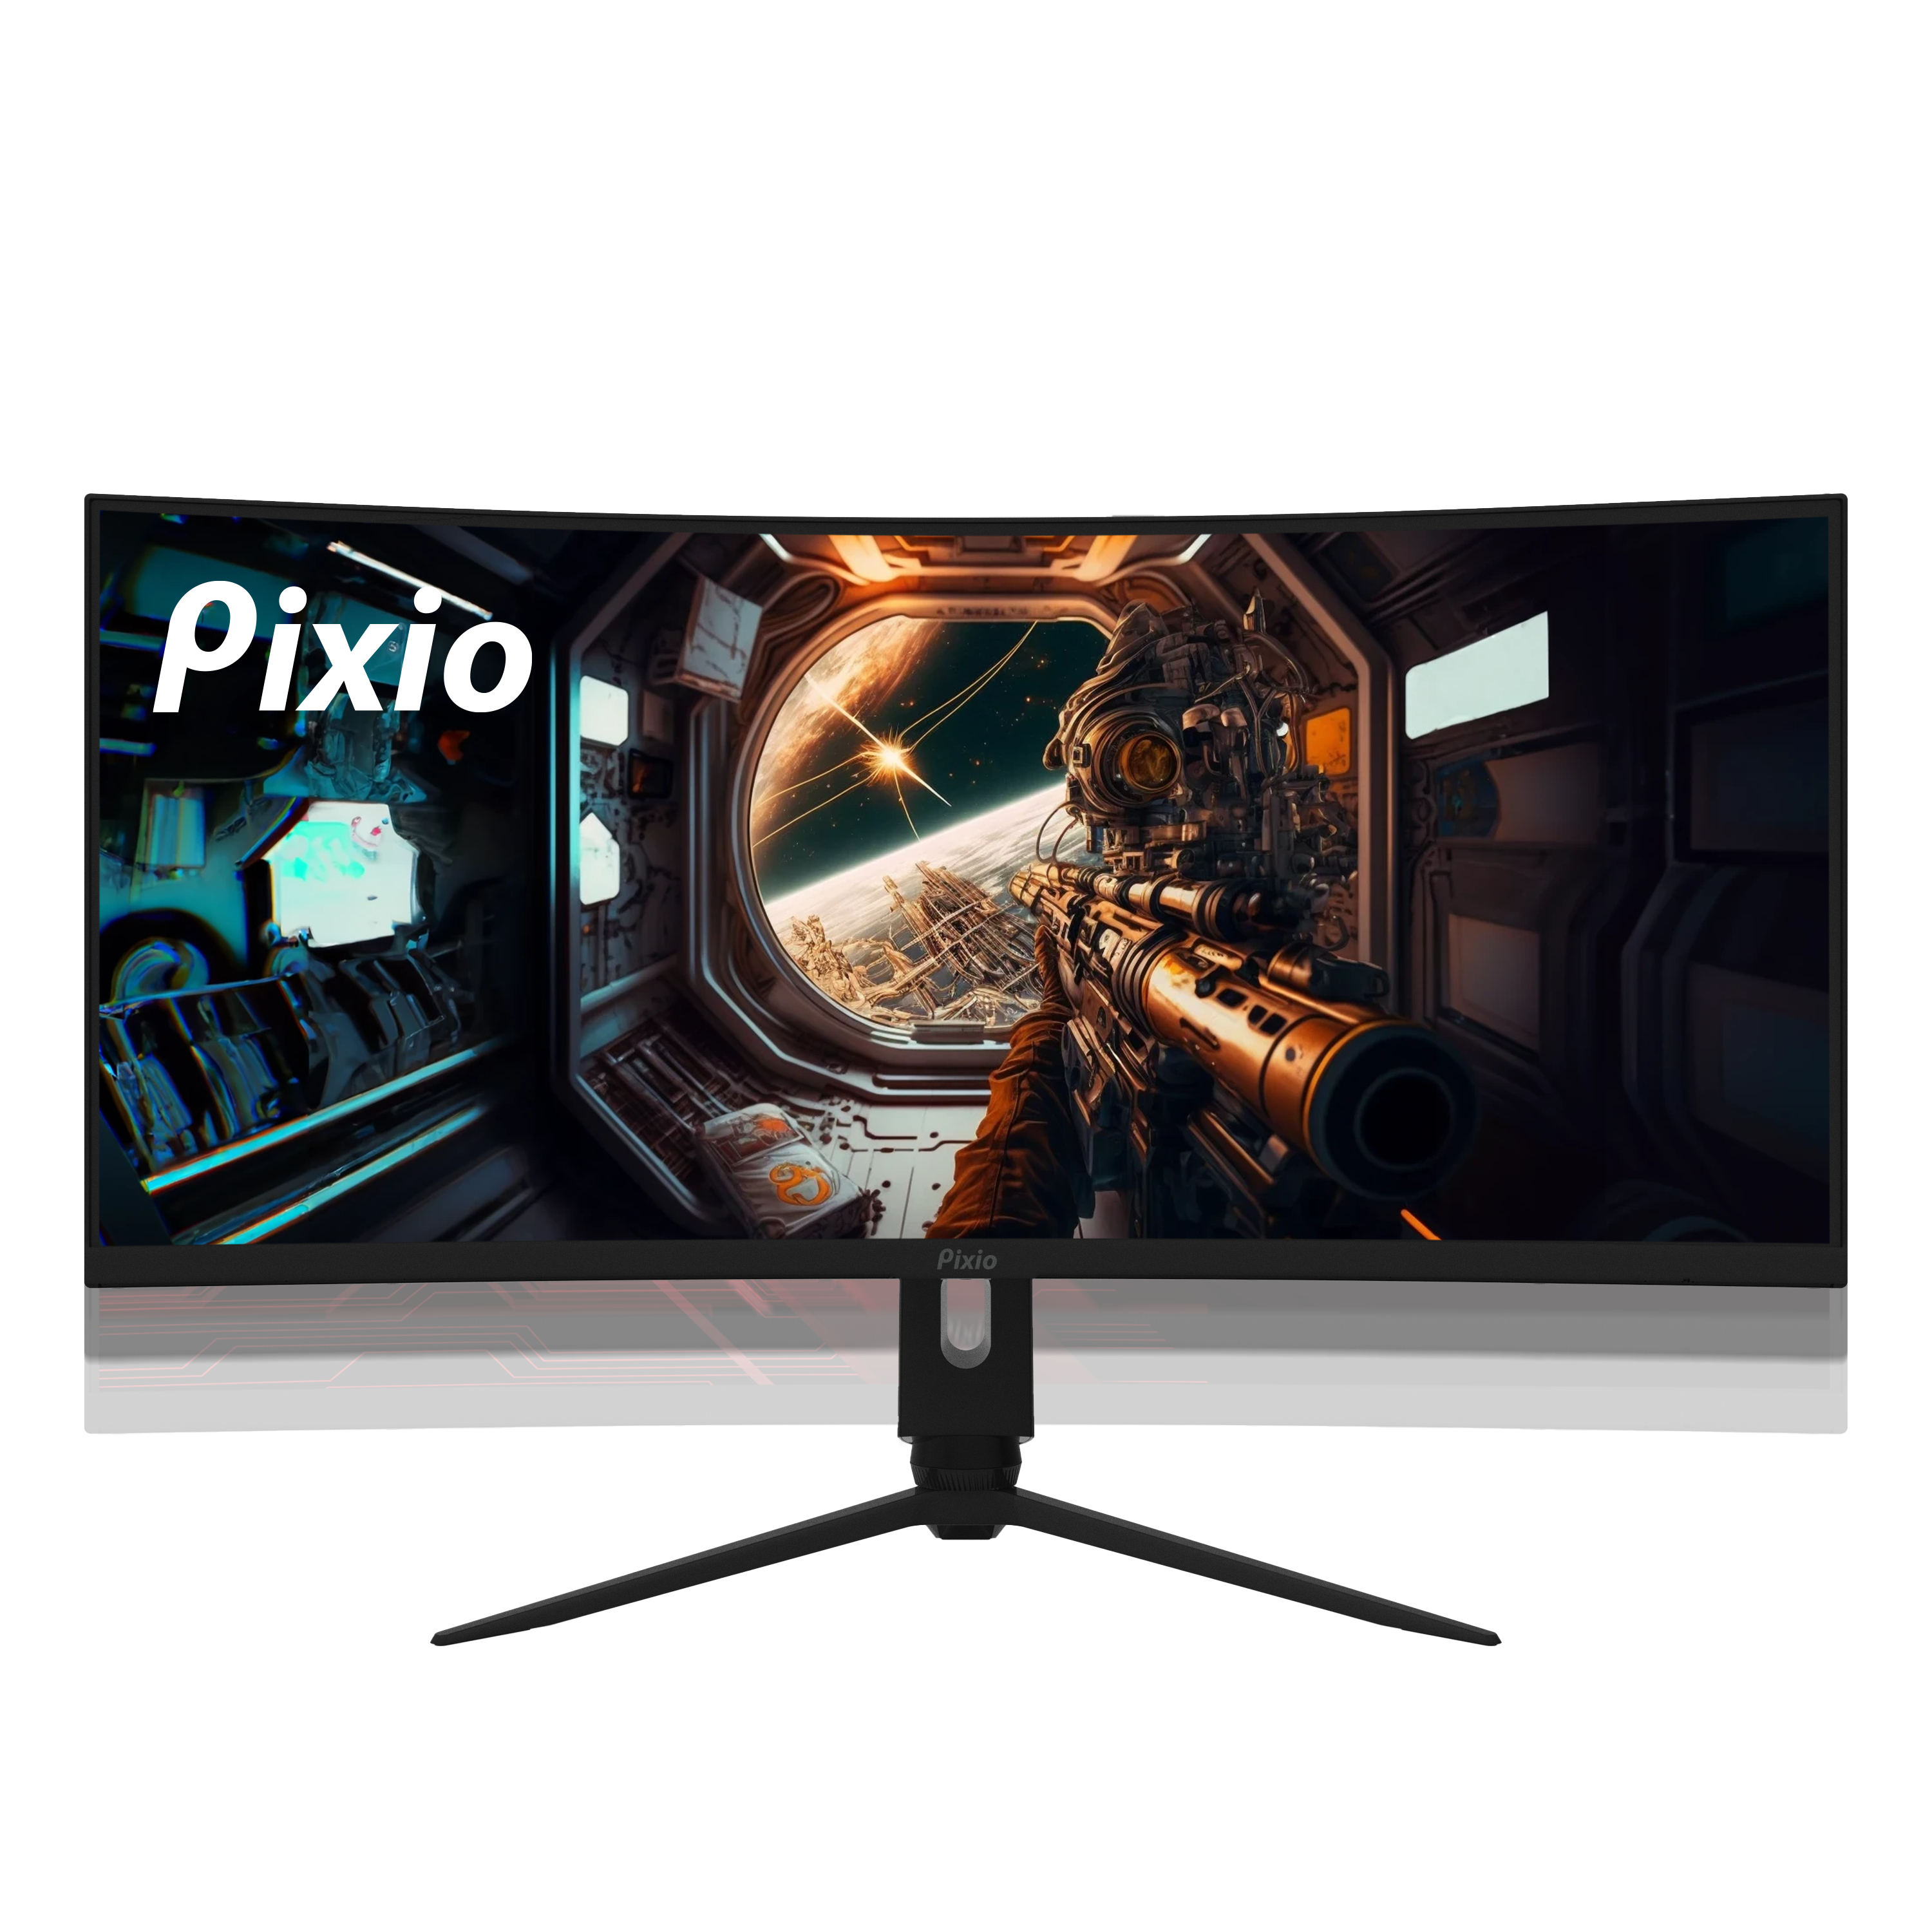 Pixio PXC348C Curved R1500 Monitor 34 Inch UWQHD VA 144Hz Gaming Monitor